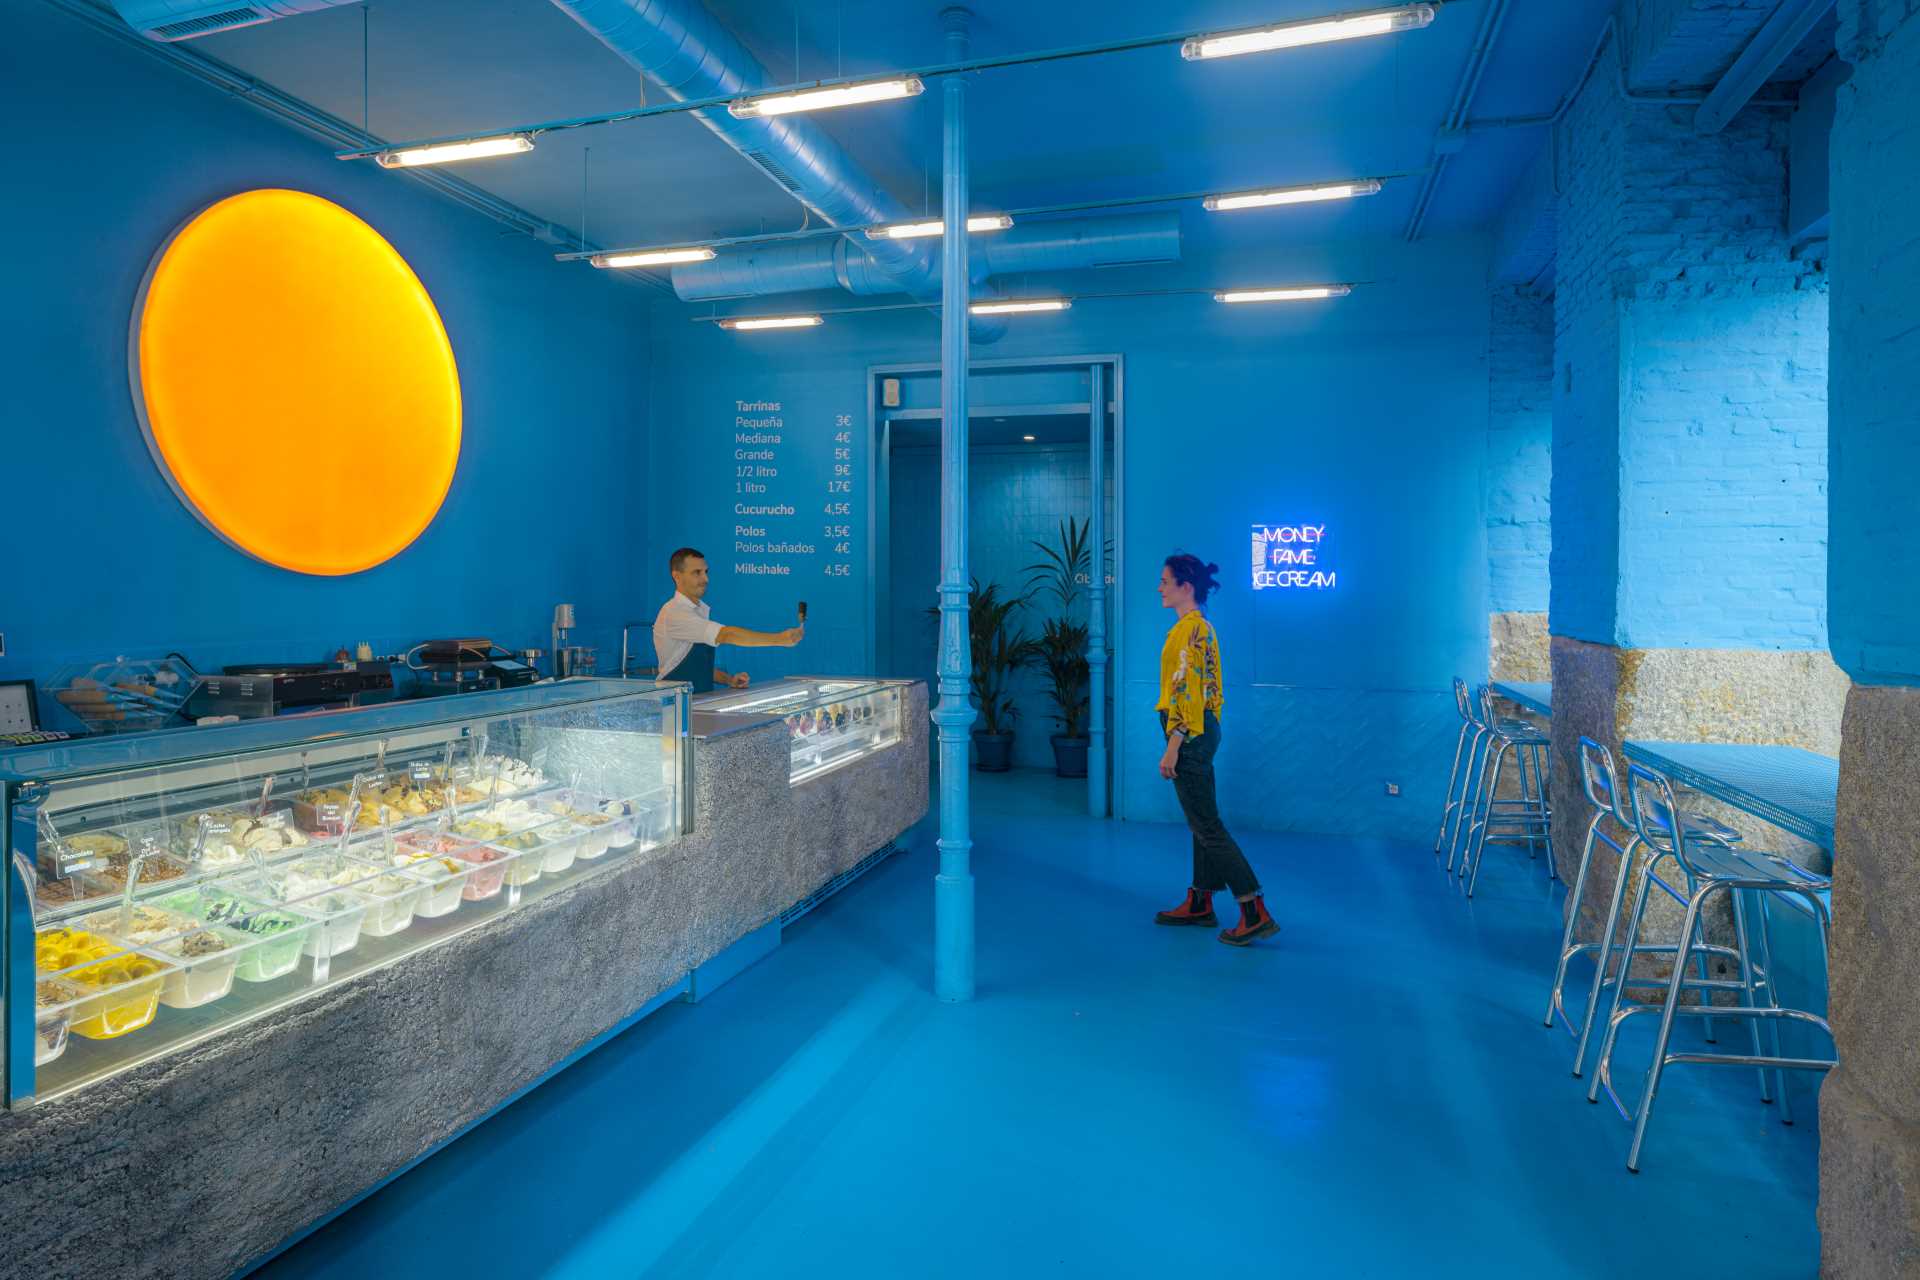 A modern ice cream shop with a bold blue interior.